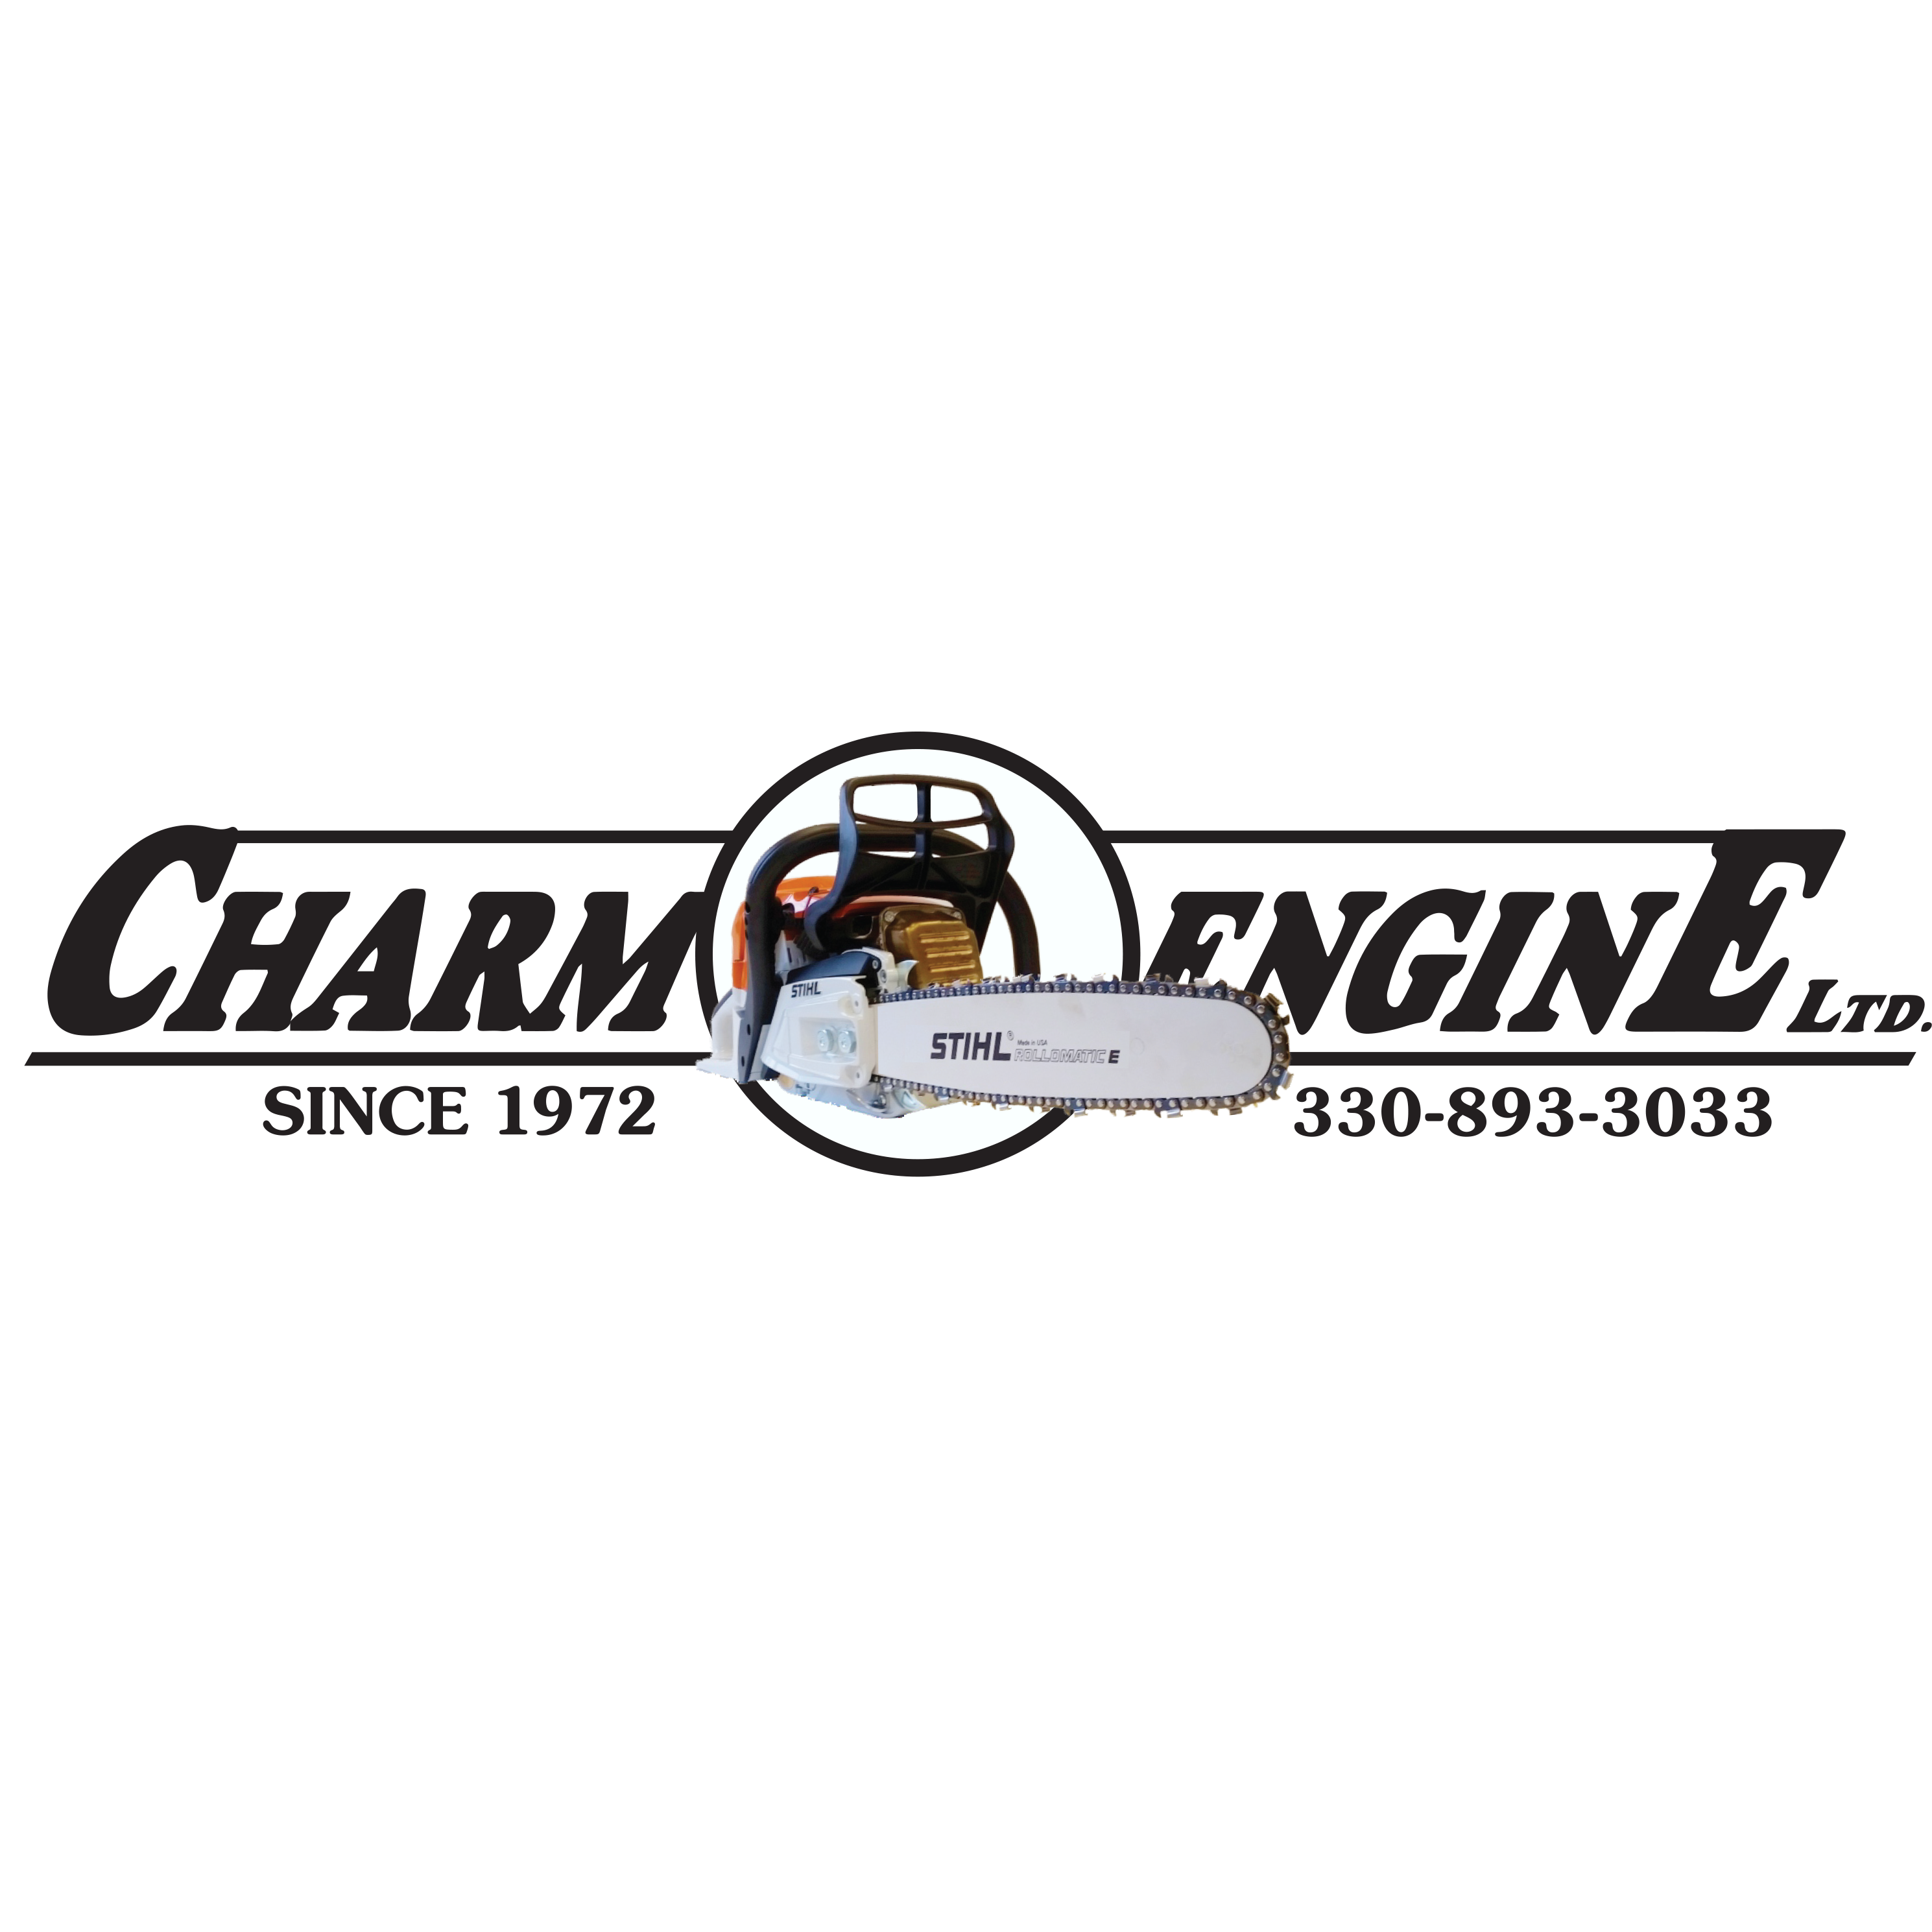 Charm Engine, Ltd.